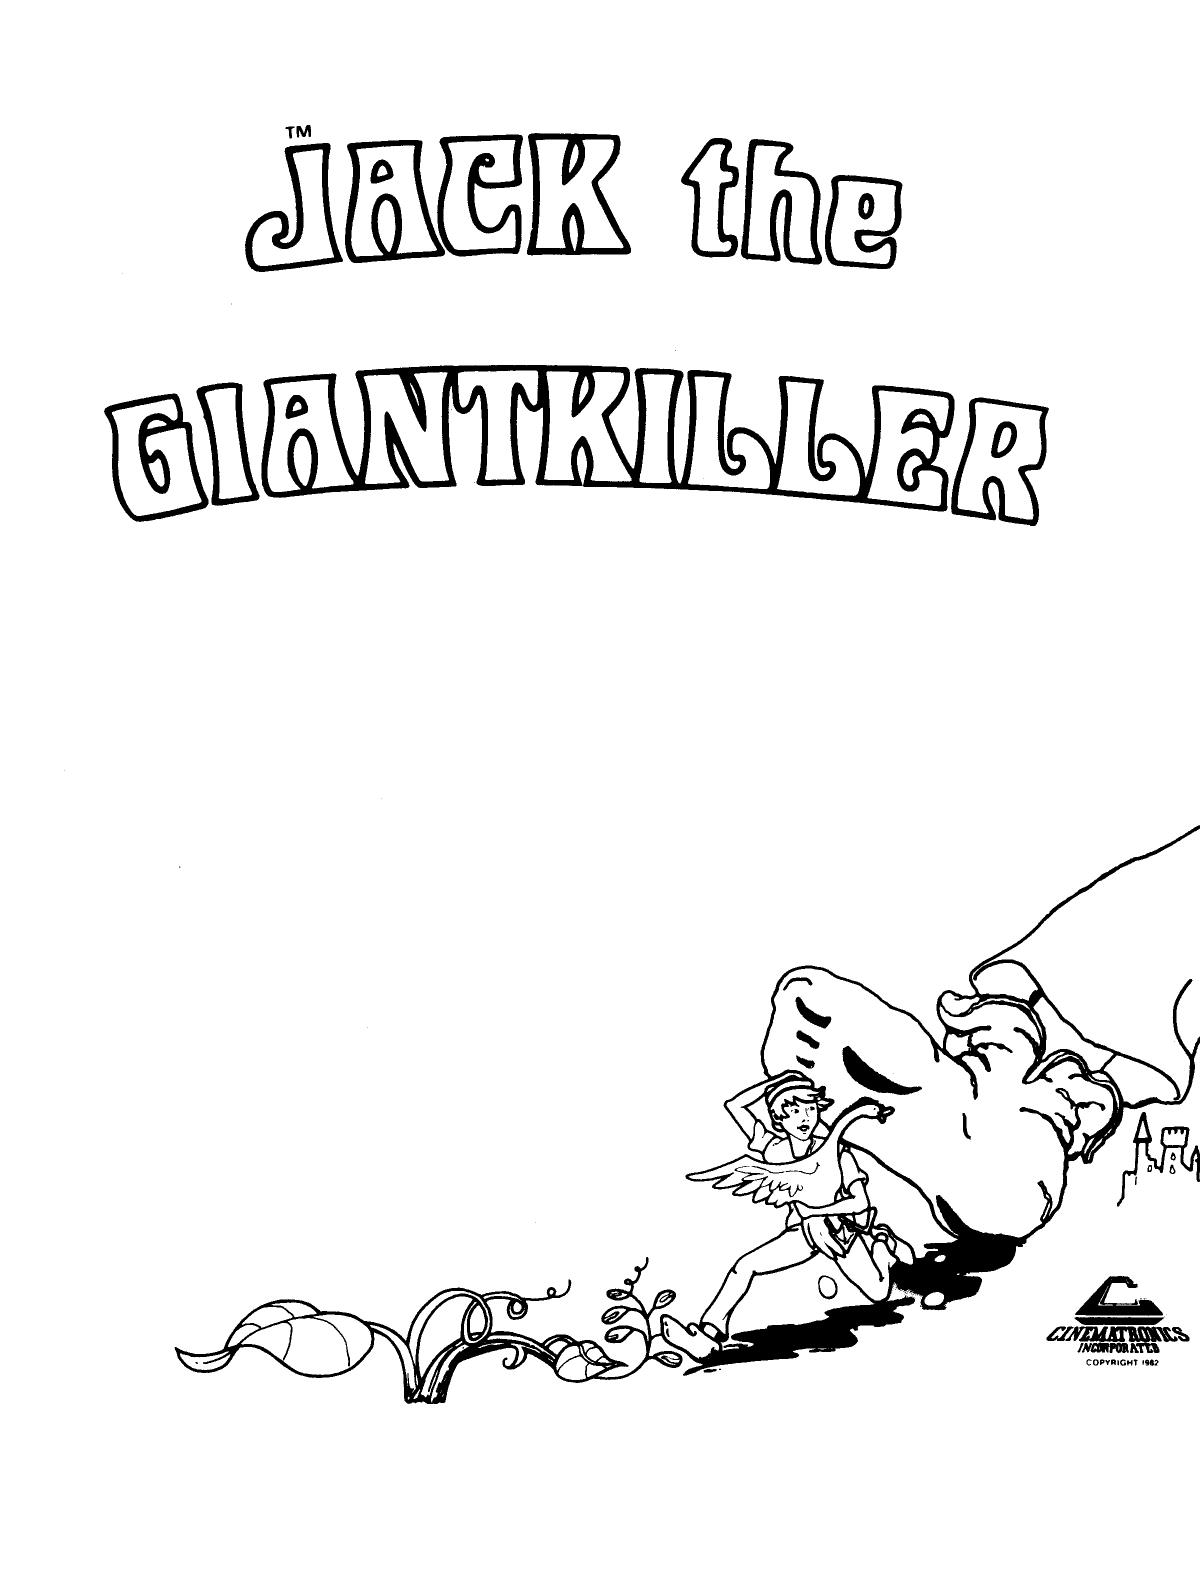 Jack the Giant Killer (Op & Maintenance) (U)